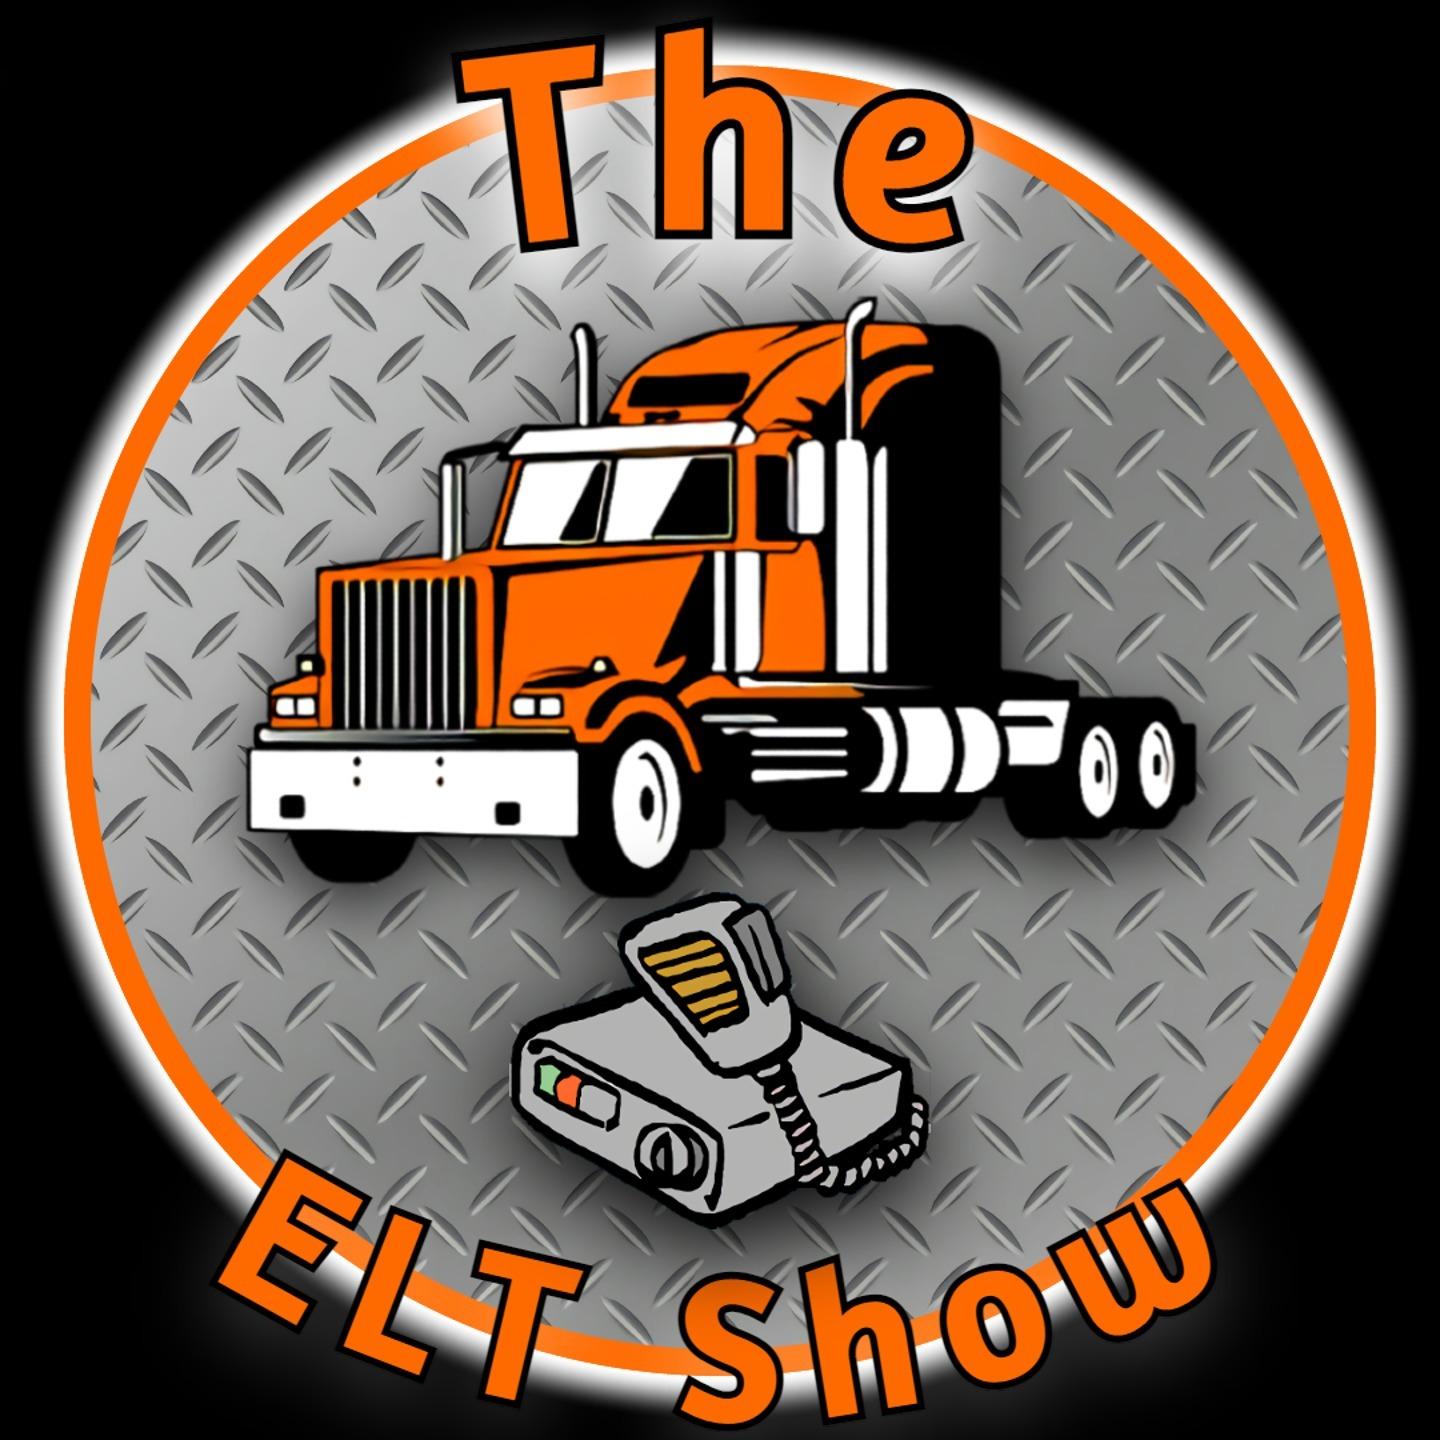 The ELT Show